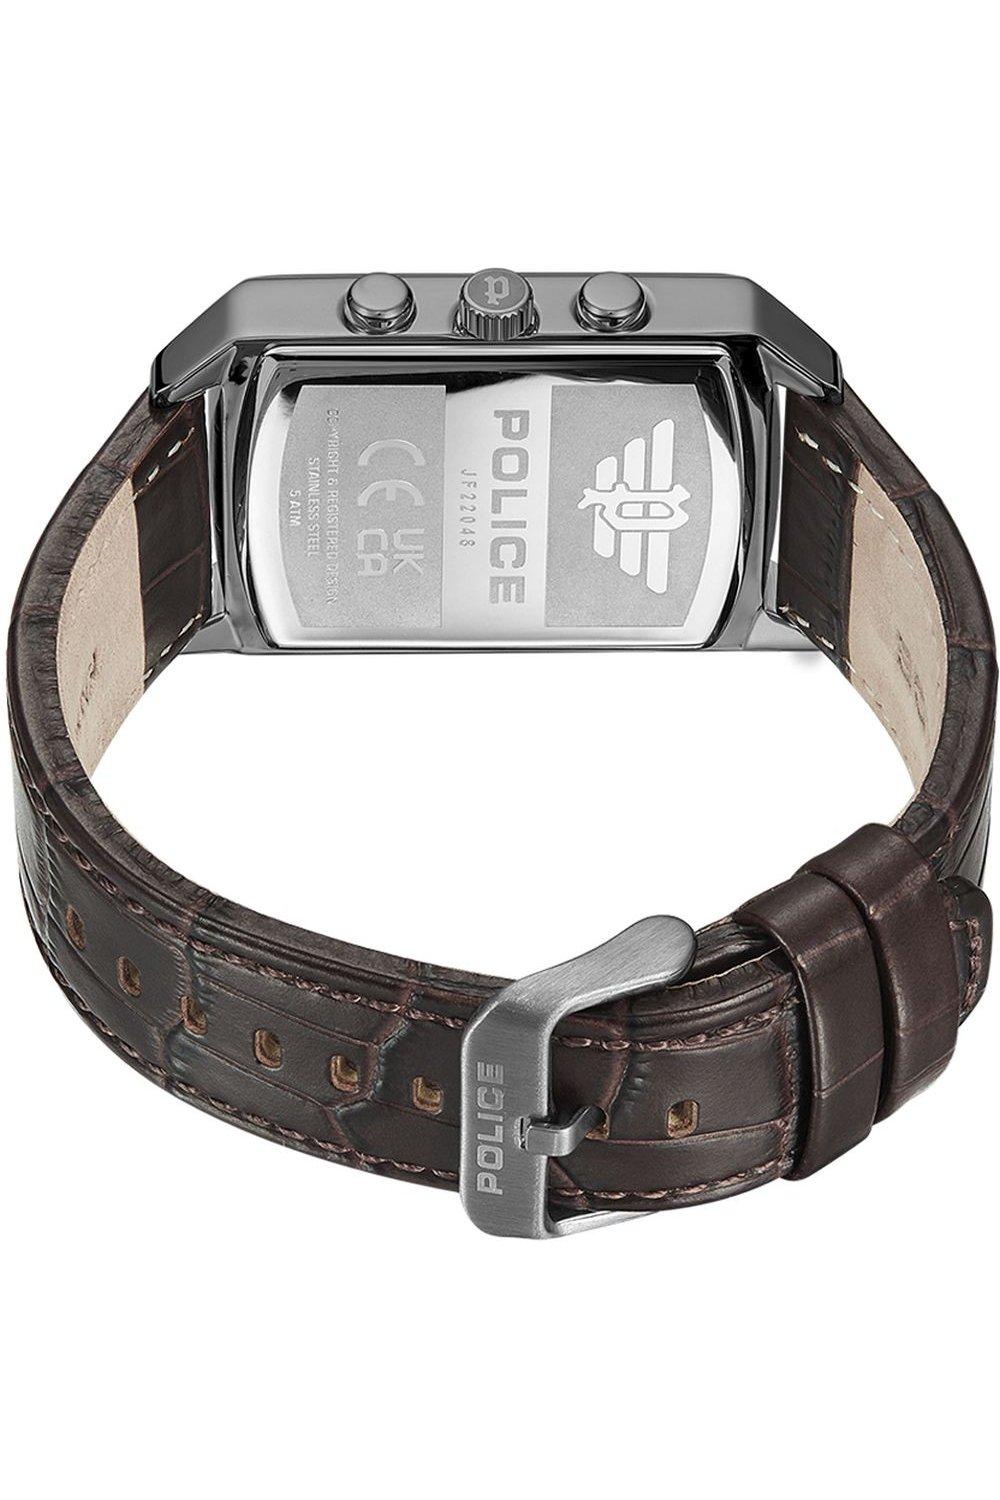 Watches | Saleve Stainless Analogue Fashion Quartz | Pewjf2204802 Police Watch Steel 